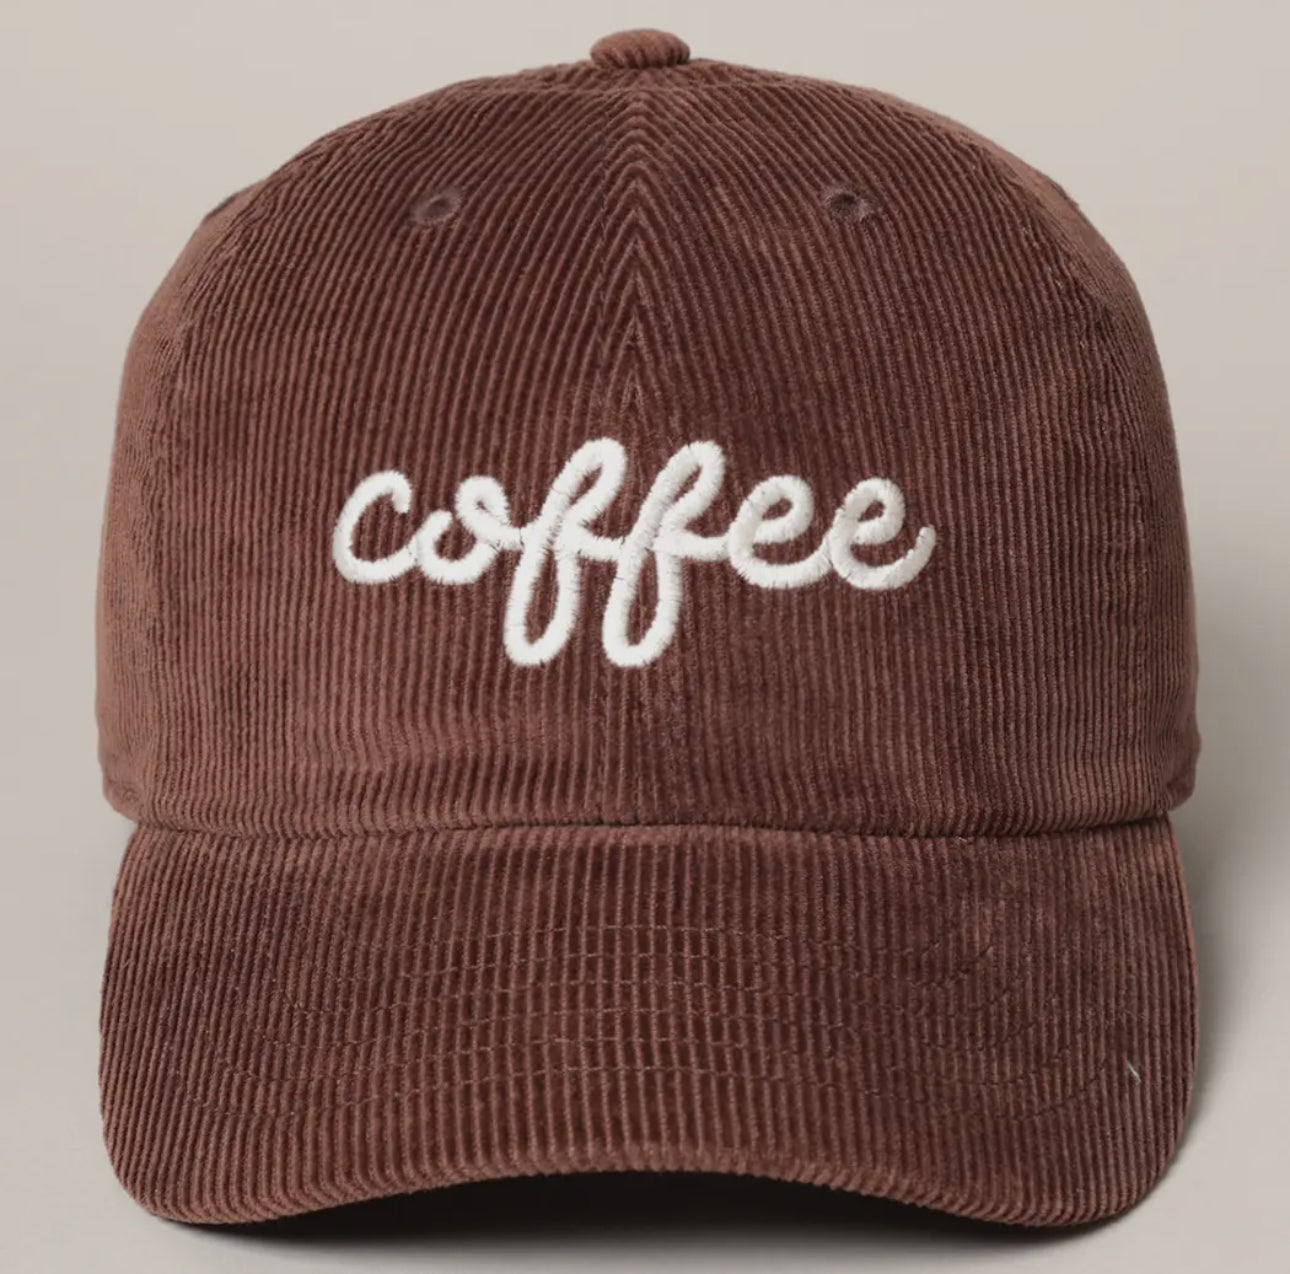 Baseball cap, coffee